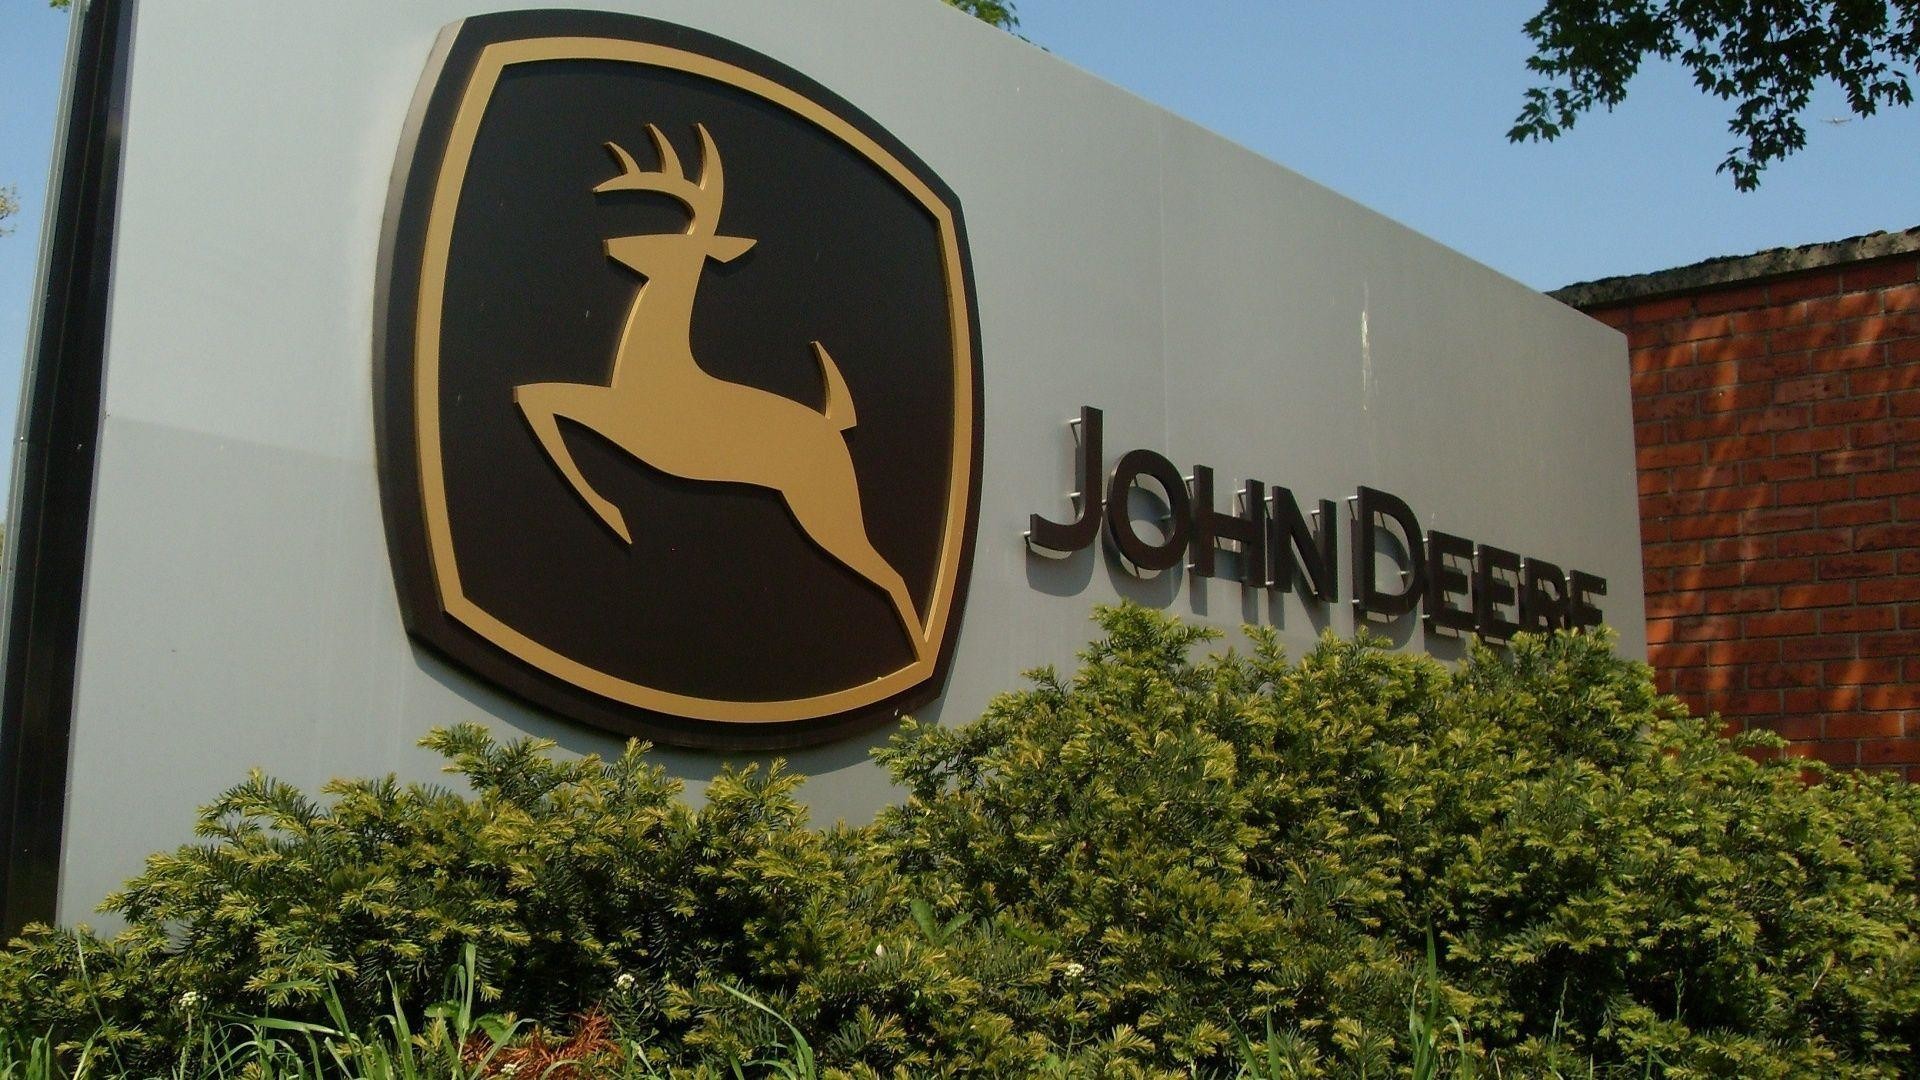 Download John Deere wallpapers for mobile phone free John Deere HD  pictures